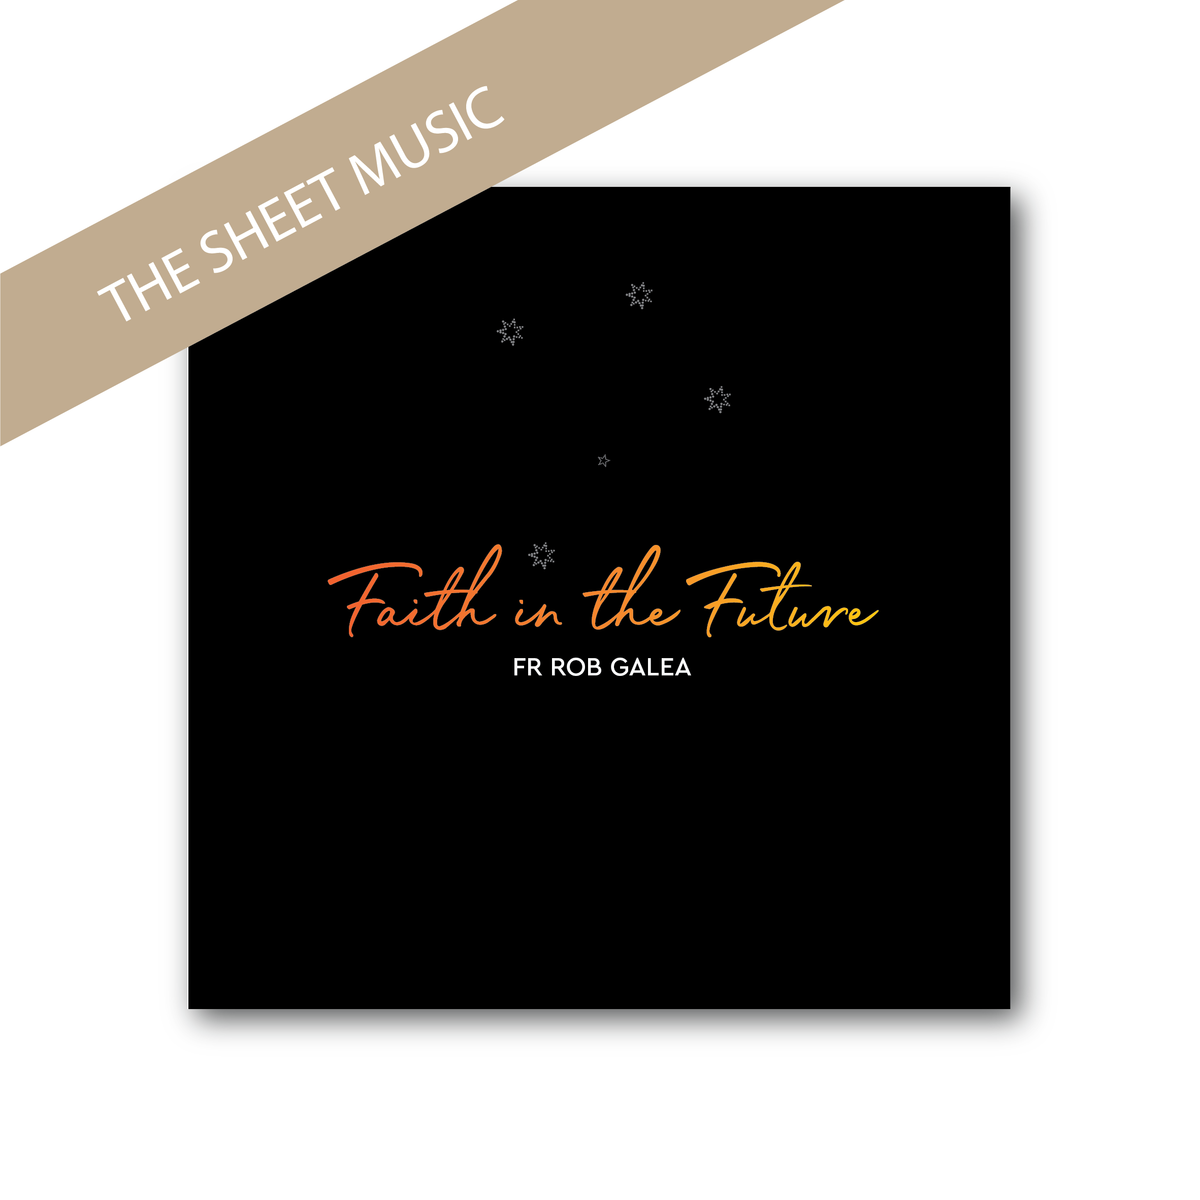 FAITH IN THE FUTURE - The Sheet Music - Modern Grace